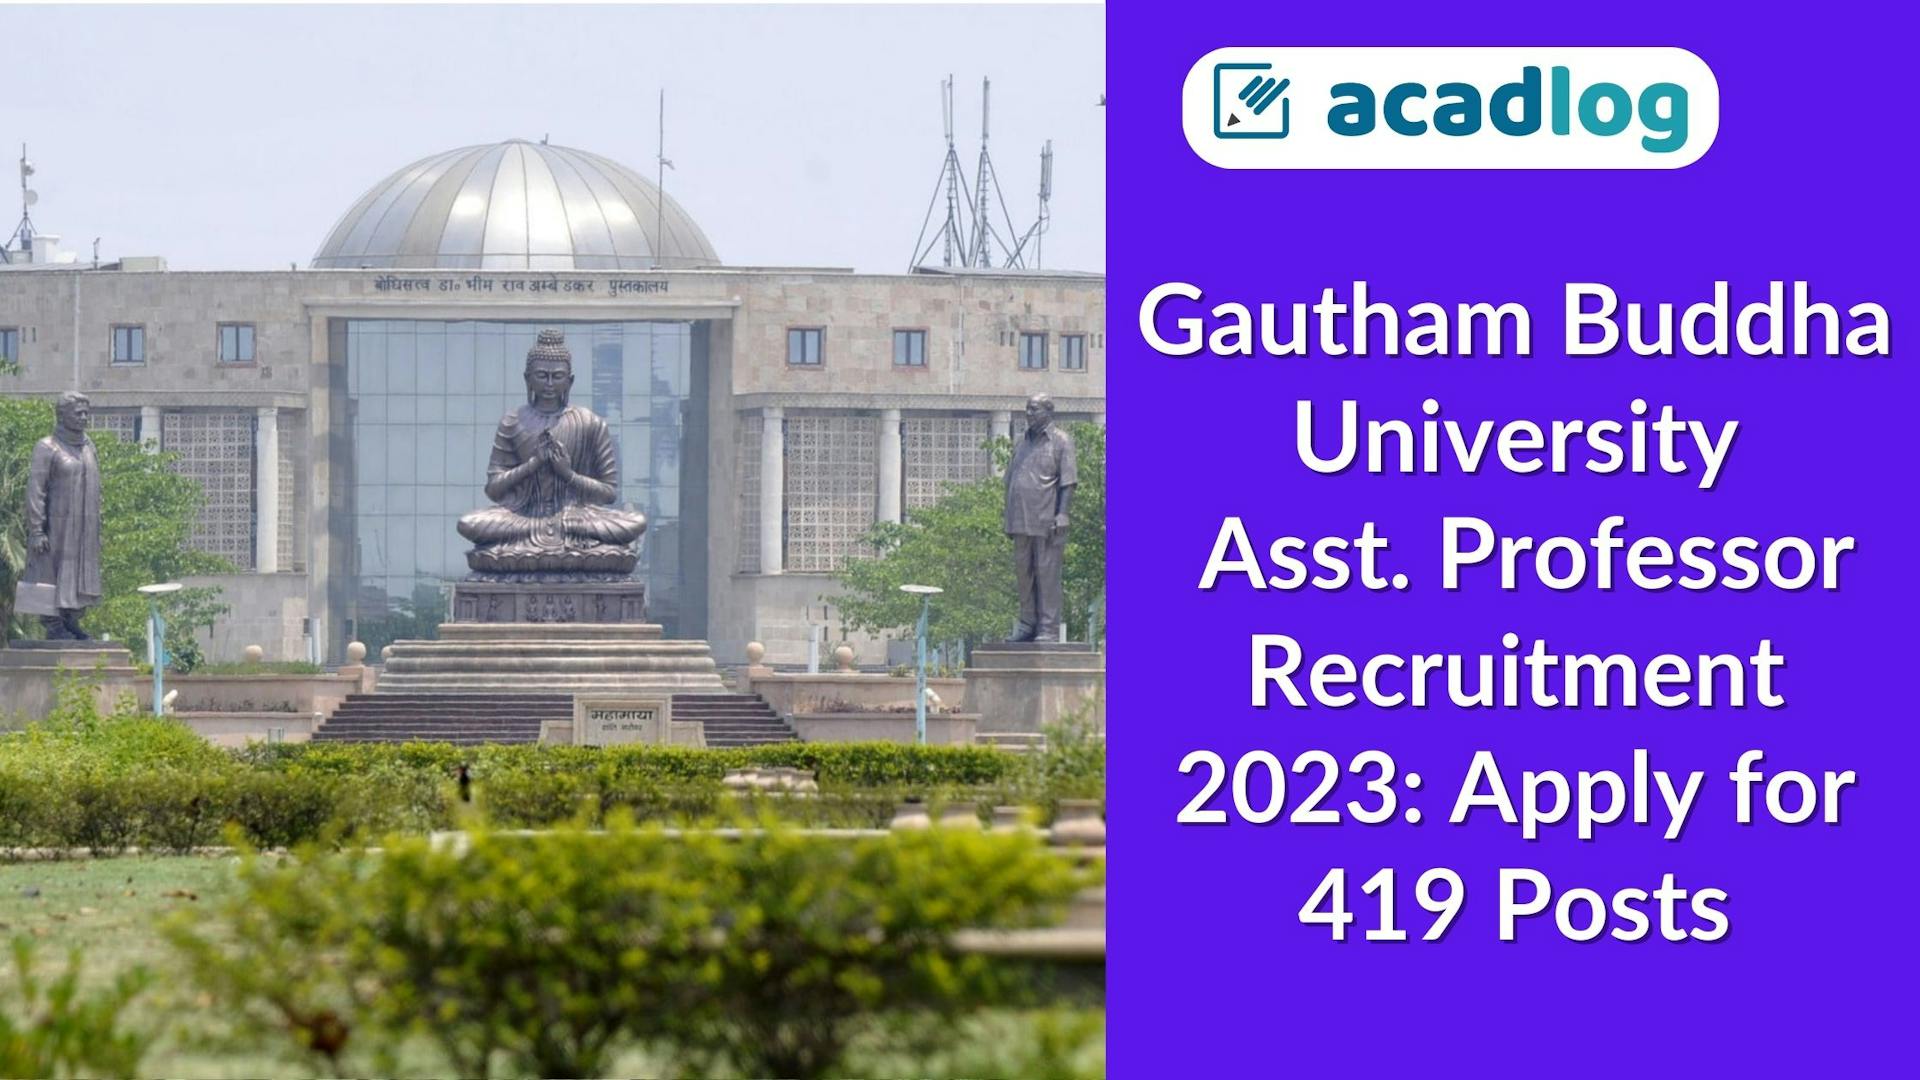 Gautham Buddha University Assistant Professor Recruitment 2023: Apply for 419 Posts